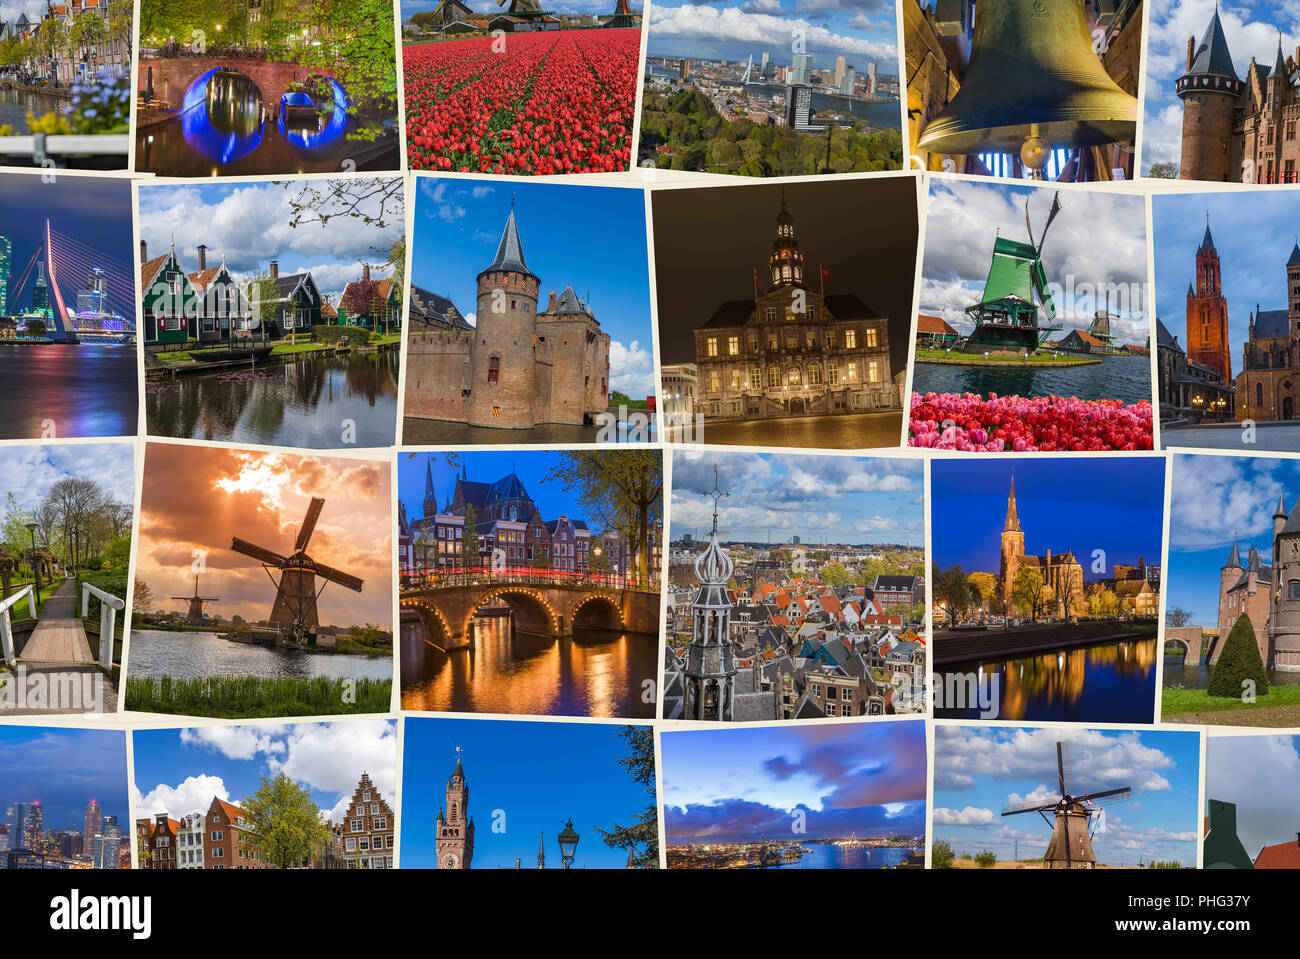 Netherlands travel images (my photos) Stock Photo